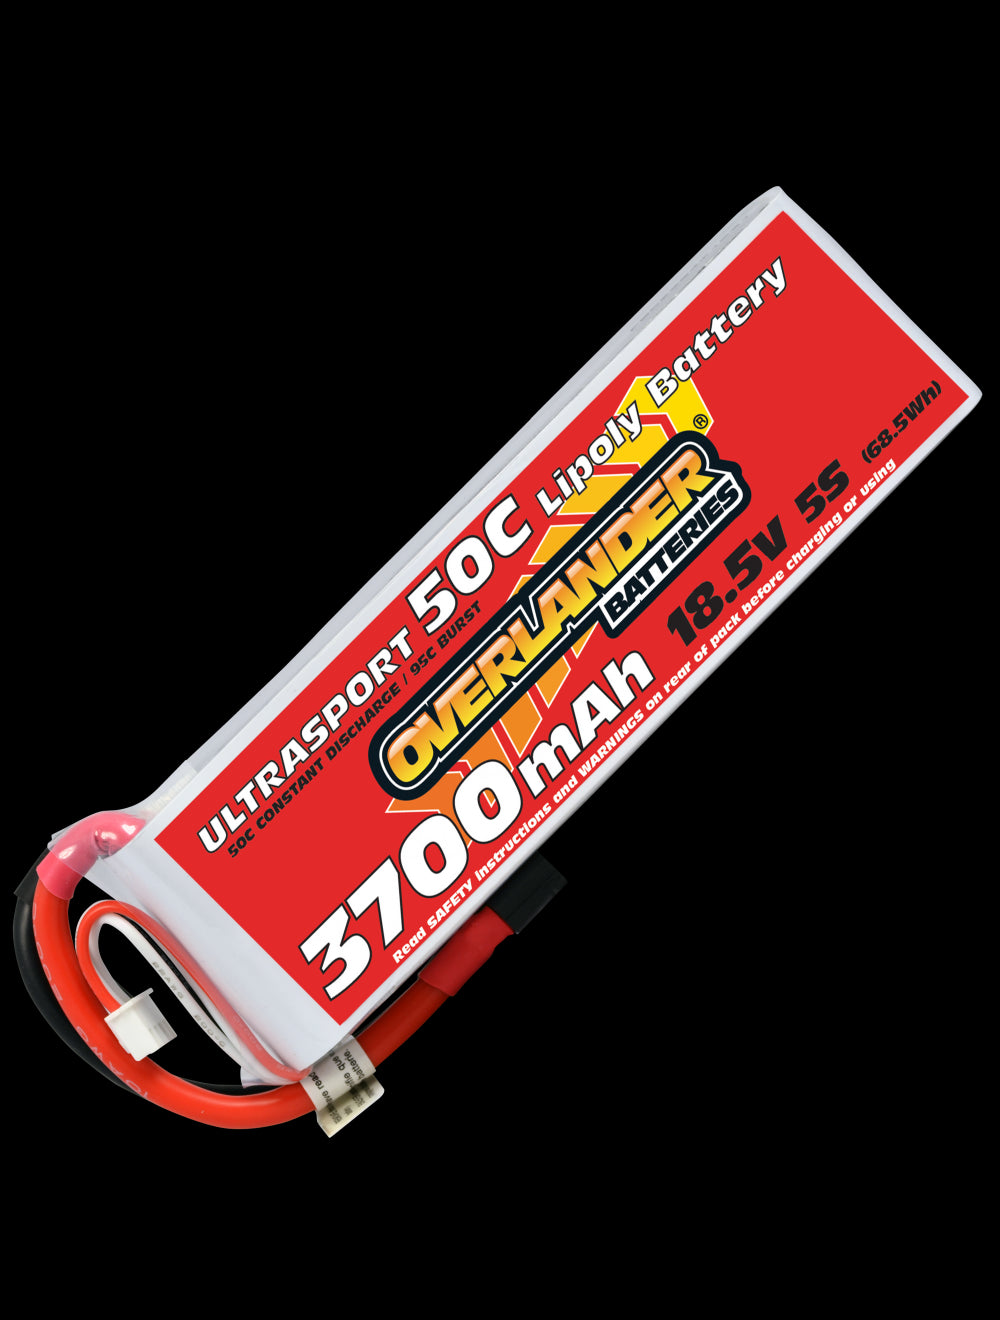 Overlander 3700mAh 18.5V 5S 50C Ultrasport LiPo Battery - XT90 Anti Spark Connector 3225